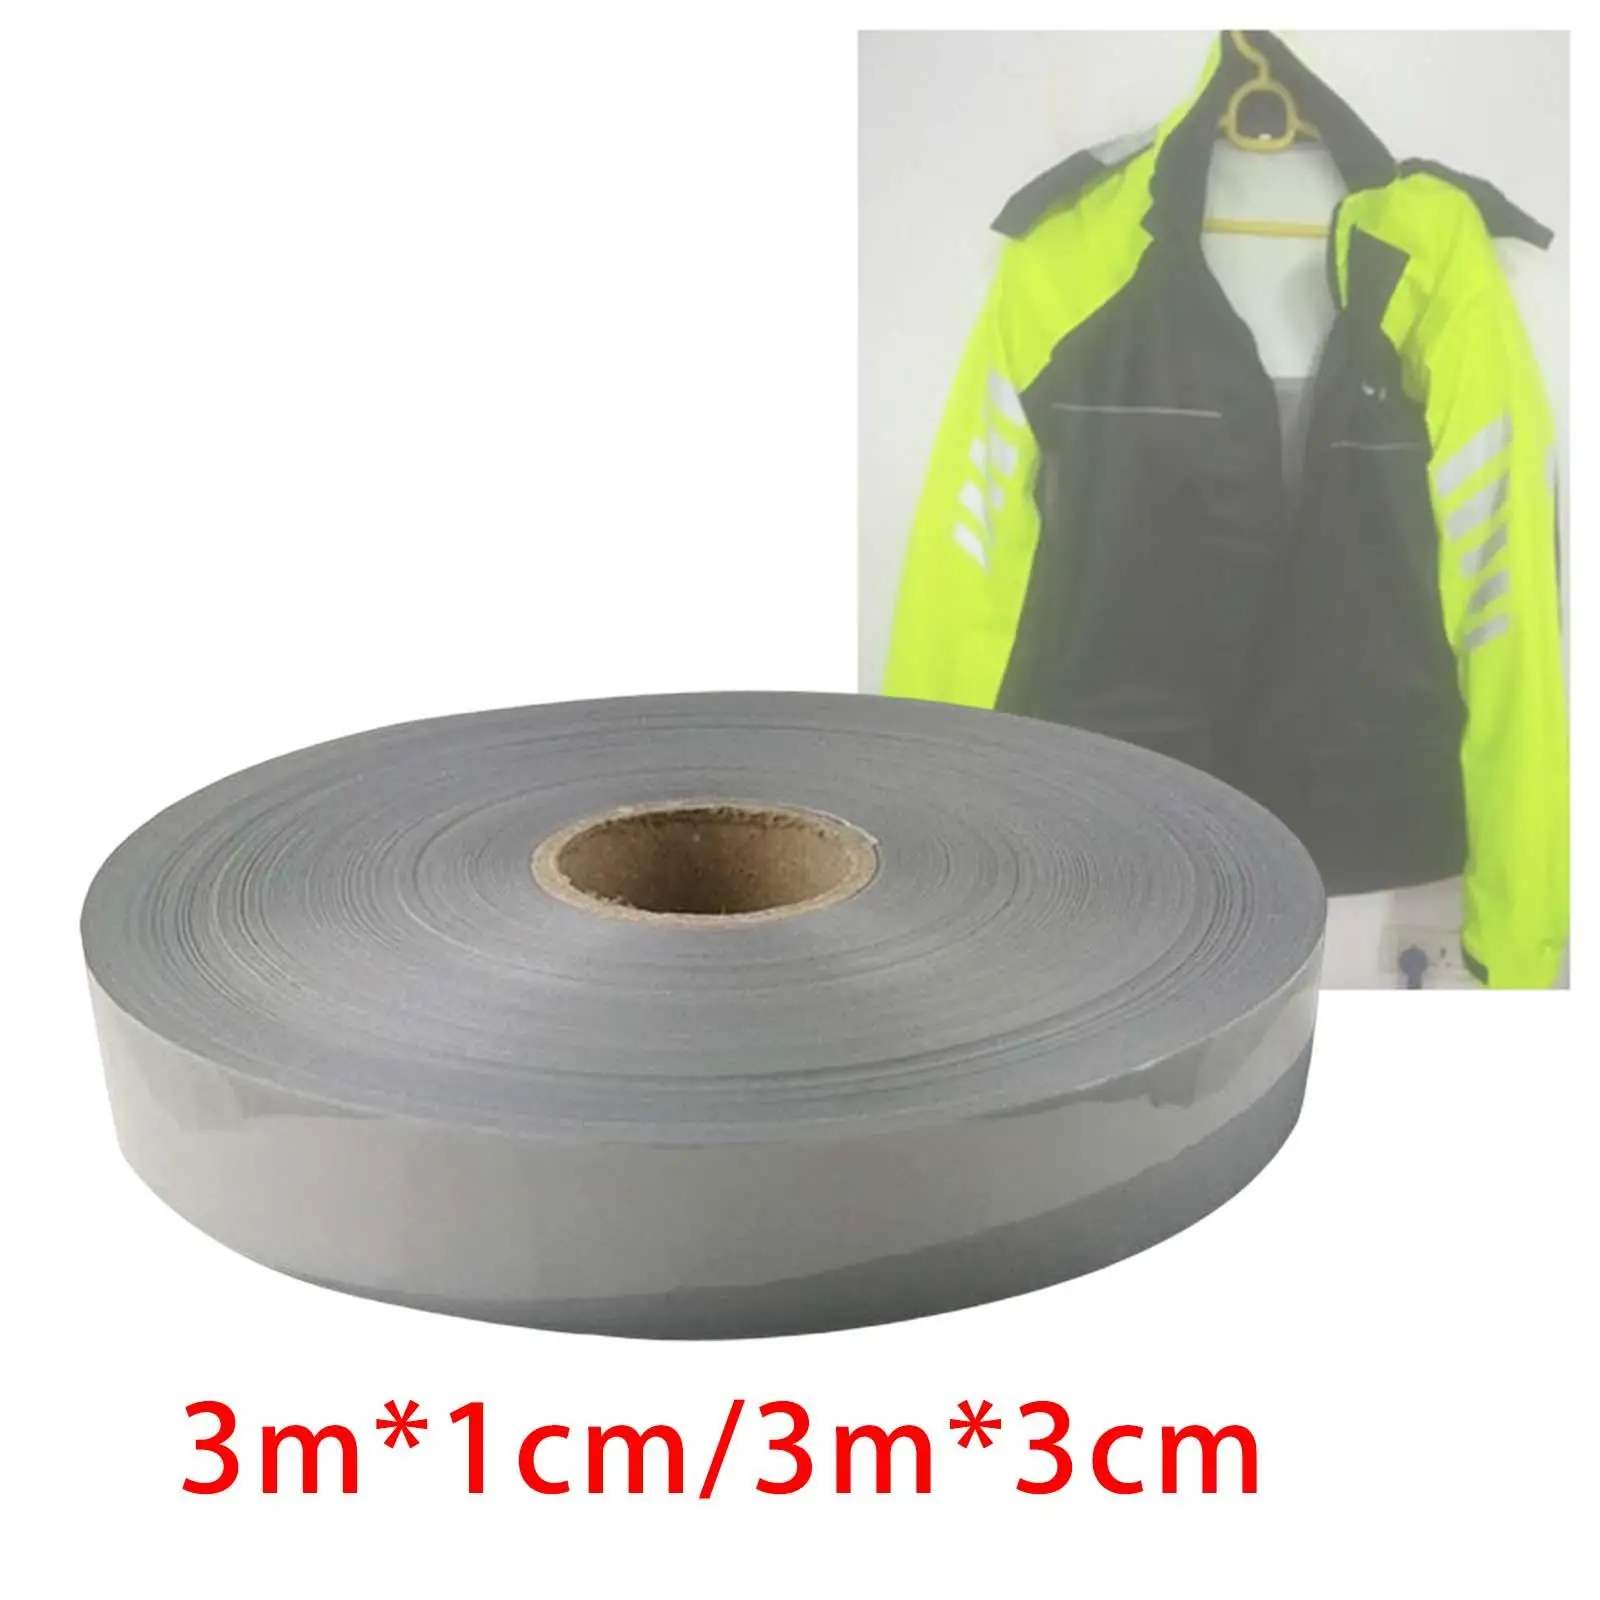 Iron On Reflective Tape DIY Premium Fabric Warning Belt Waterproof Heat Transfer Vinyl Film for Clothes Pants Outdoor